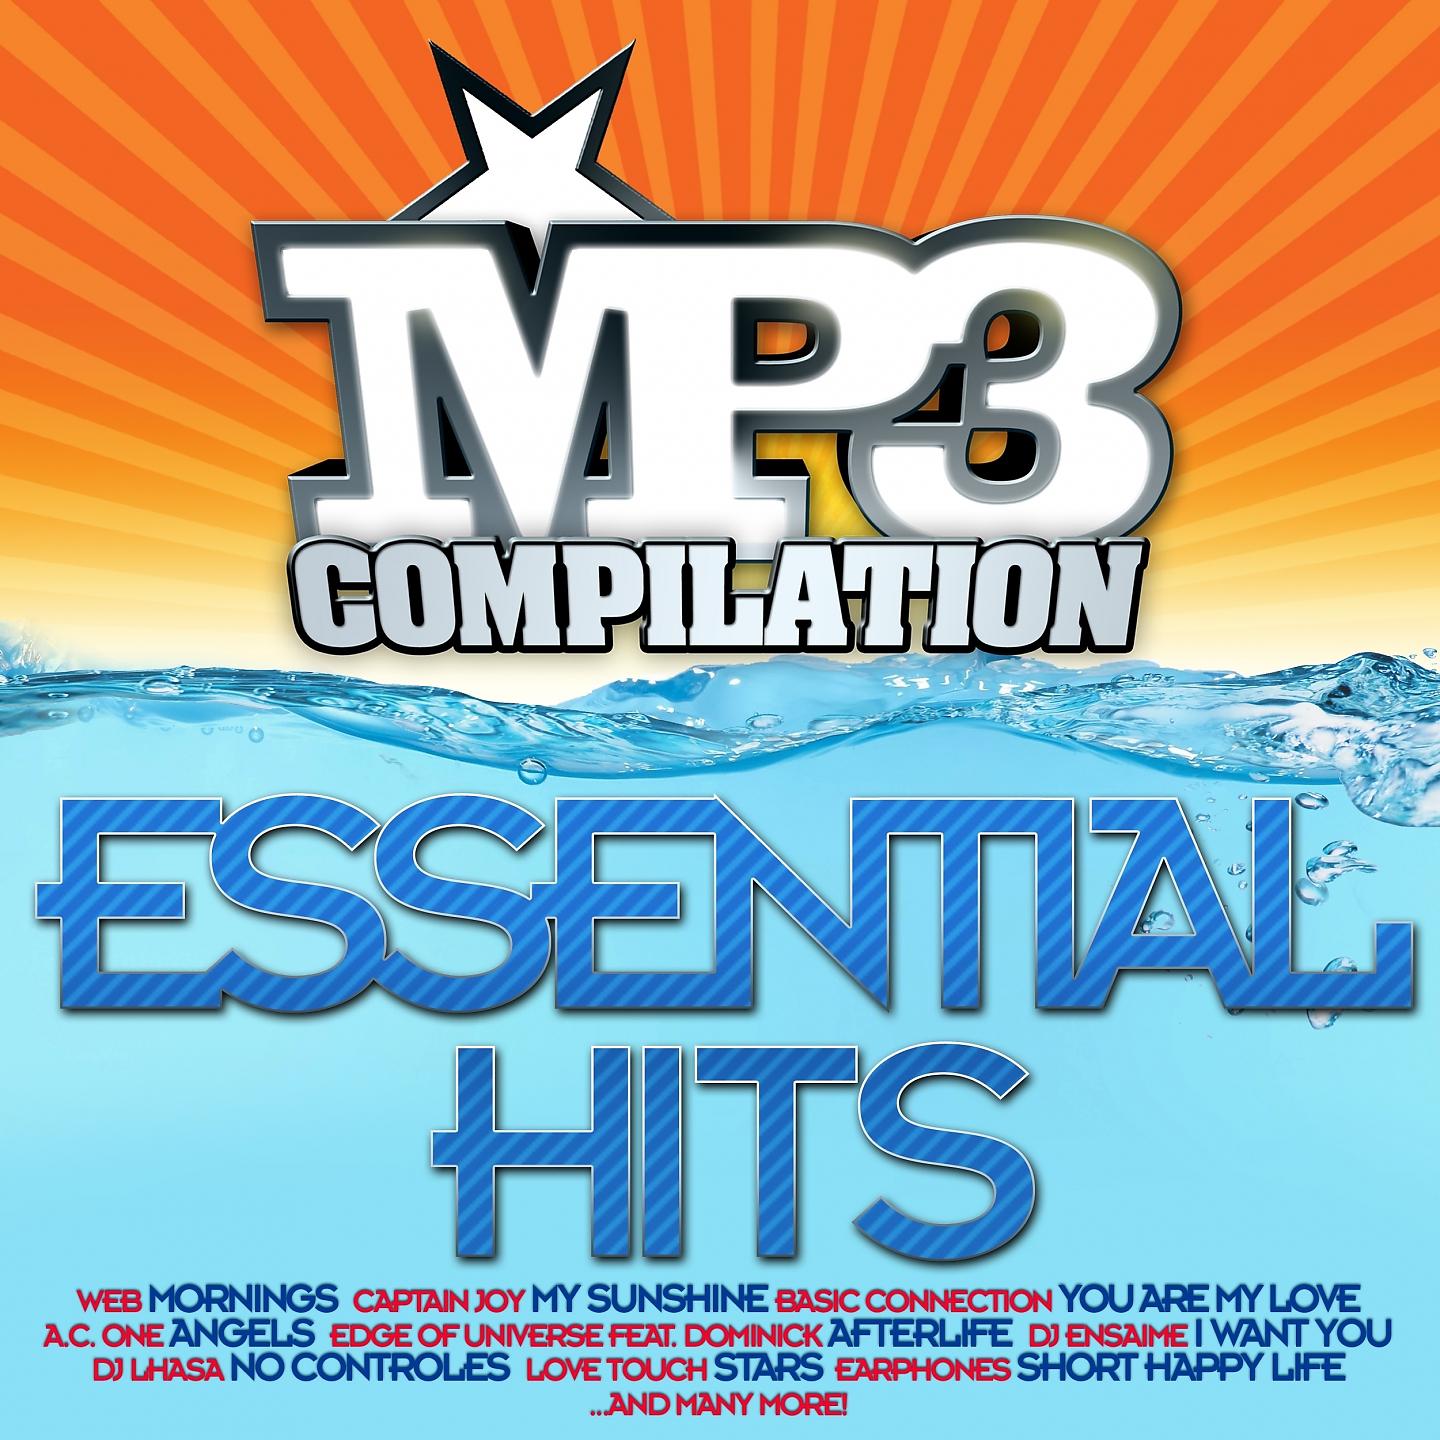 Постер альбома Mp3 Compilation Essential Hits